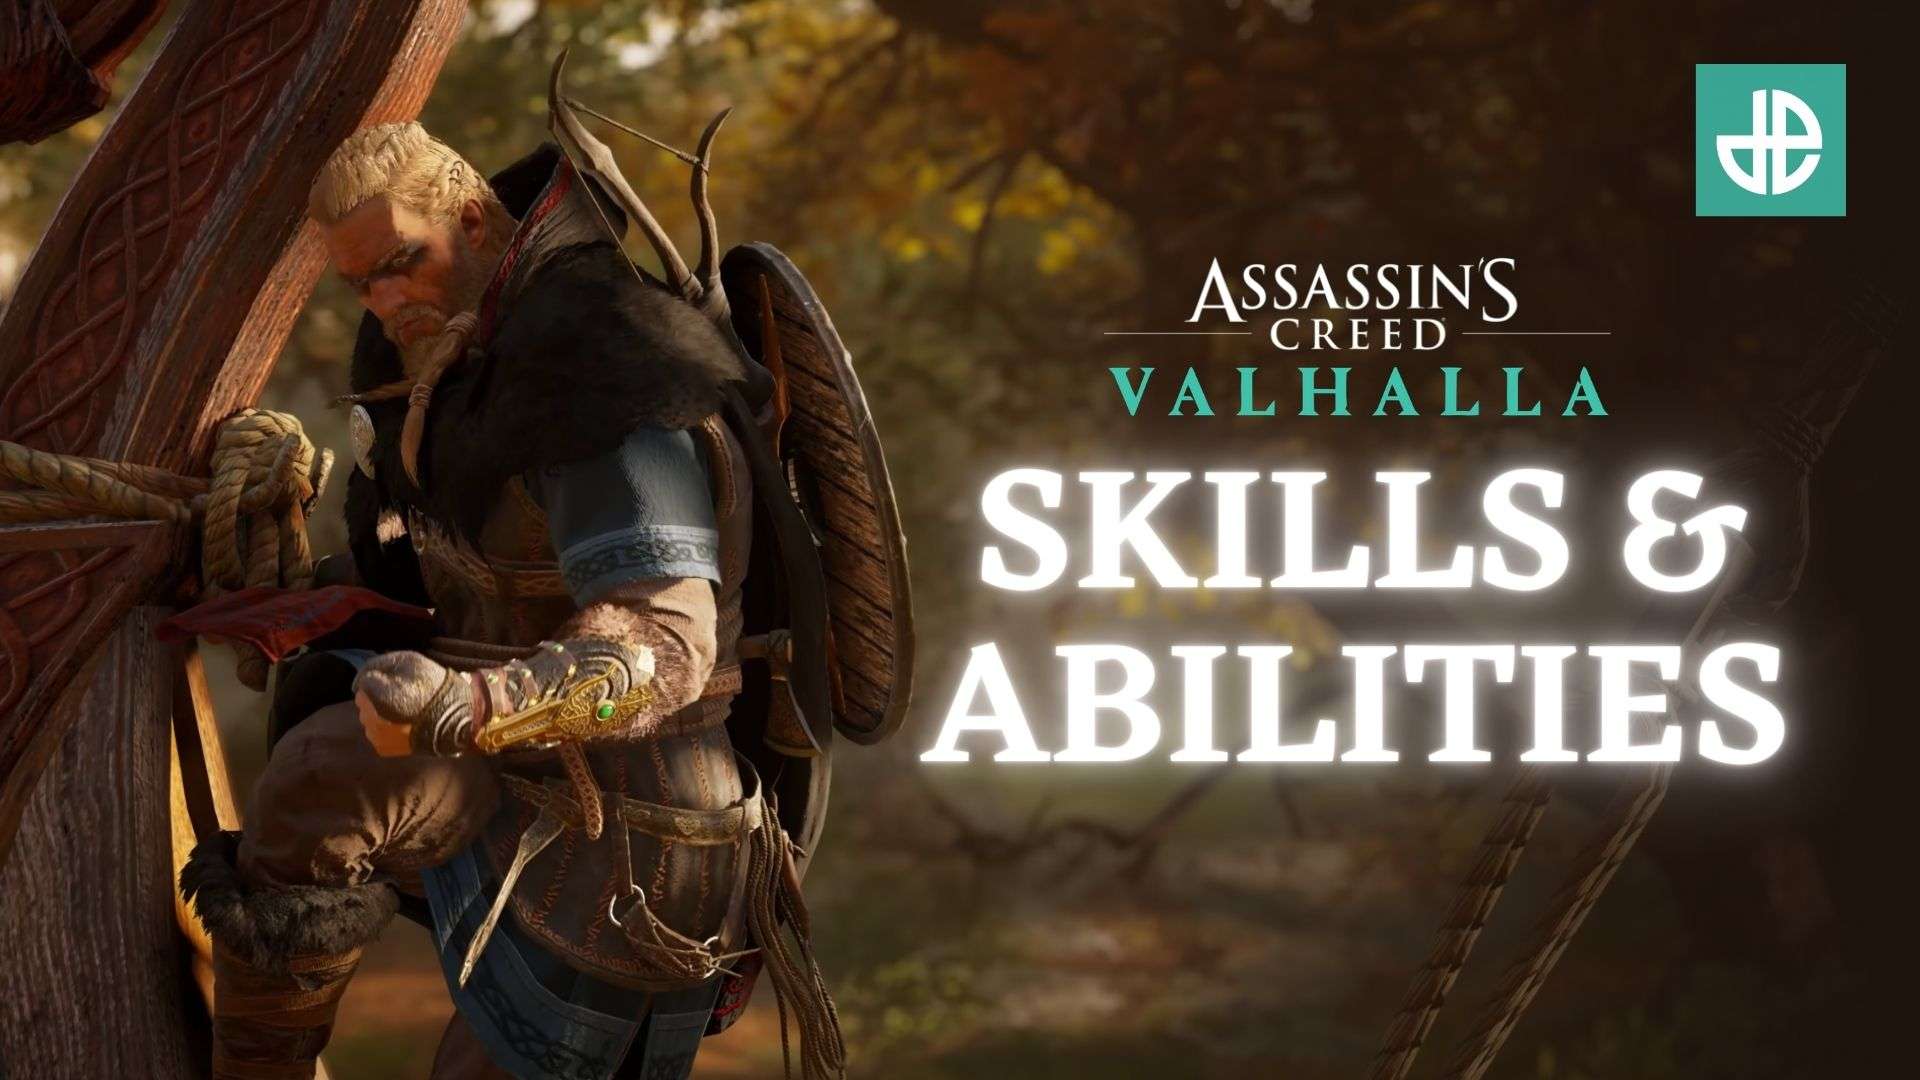 Eivor climbing in Assassin's Creed Valhalla